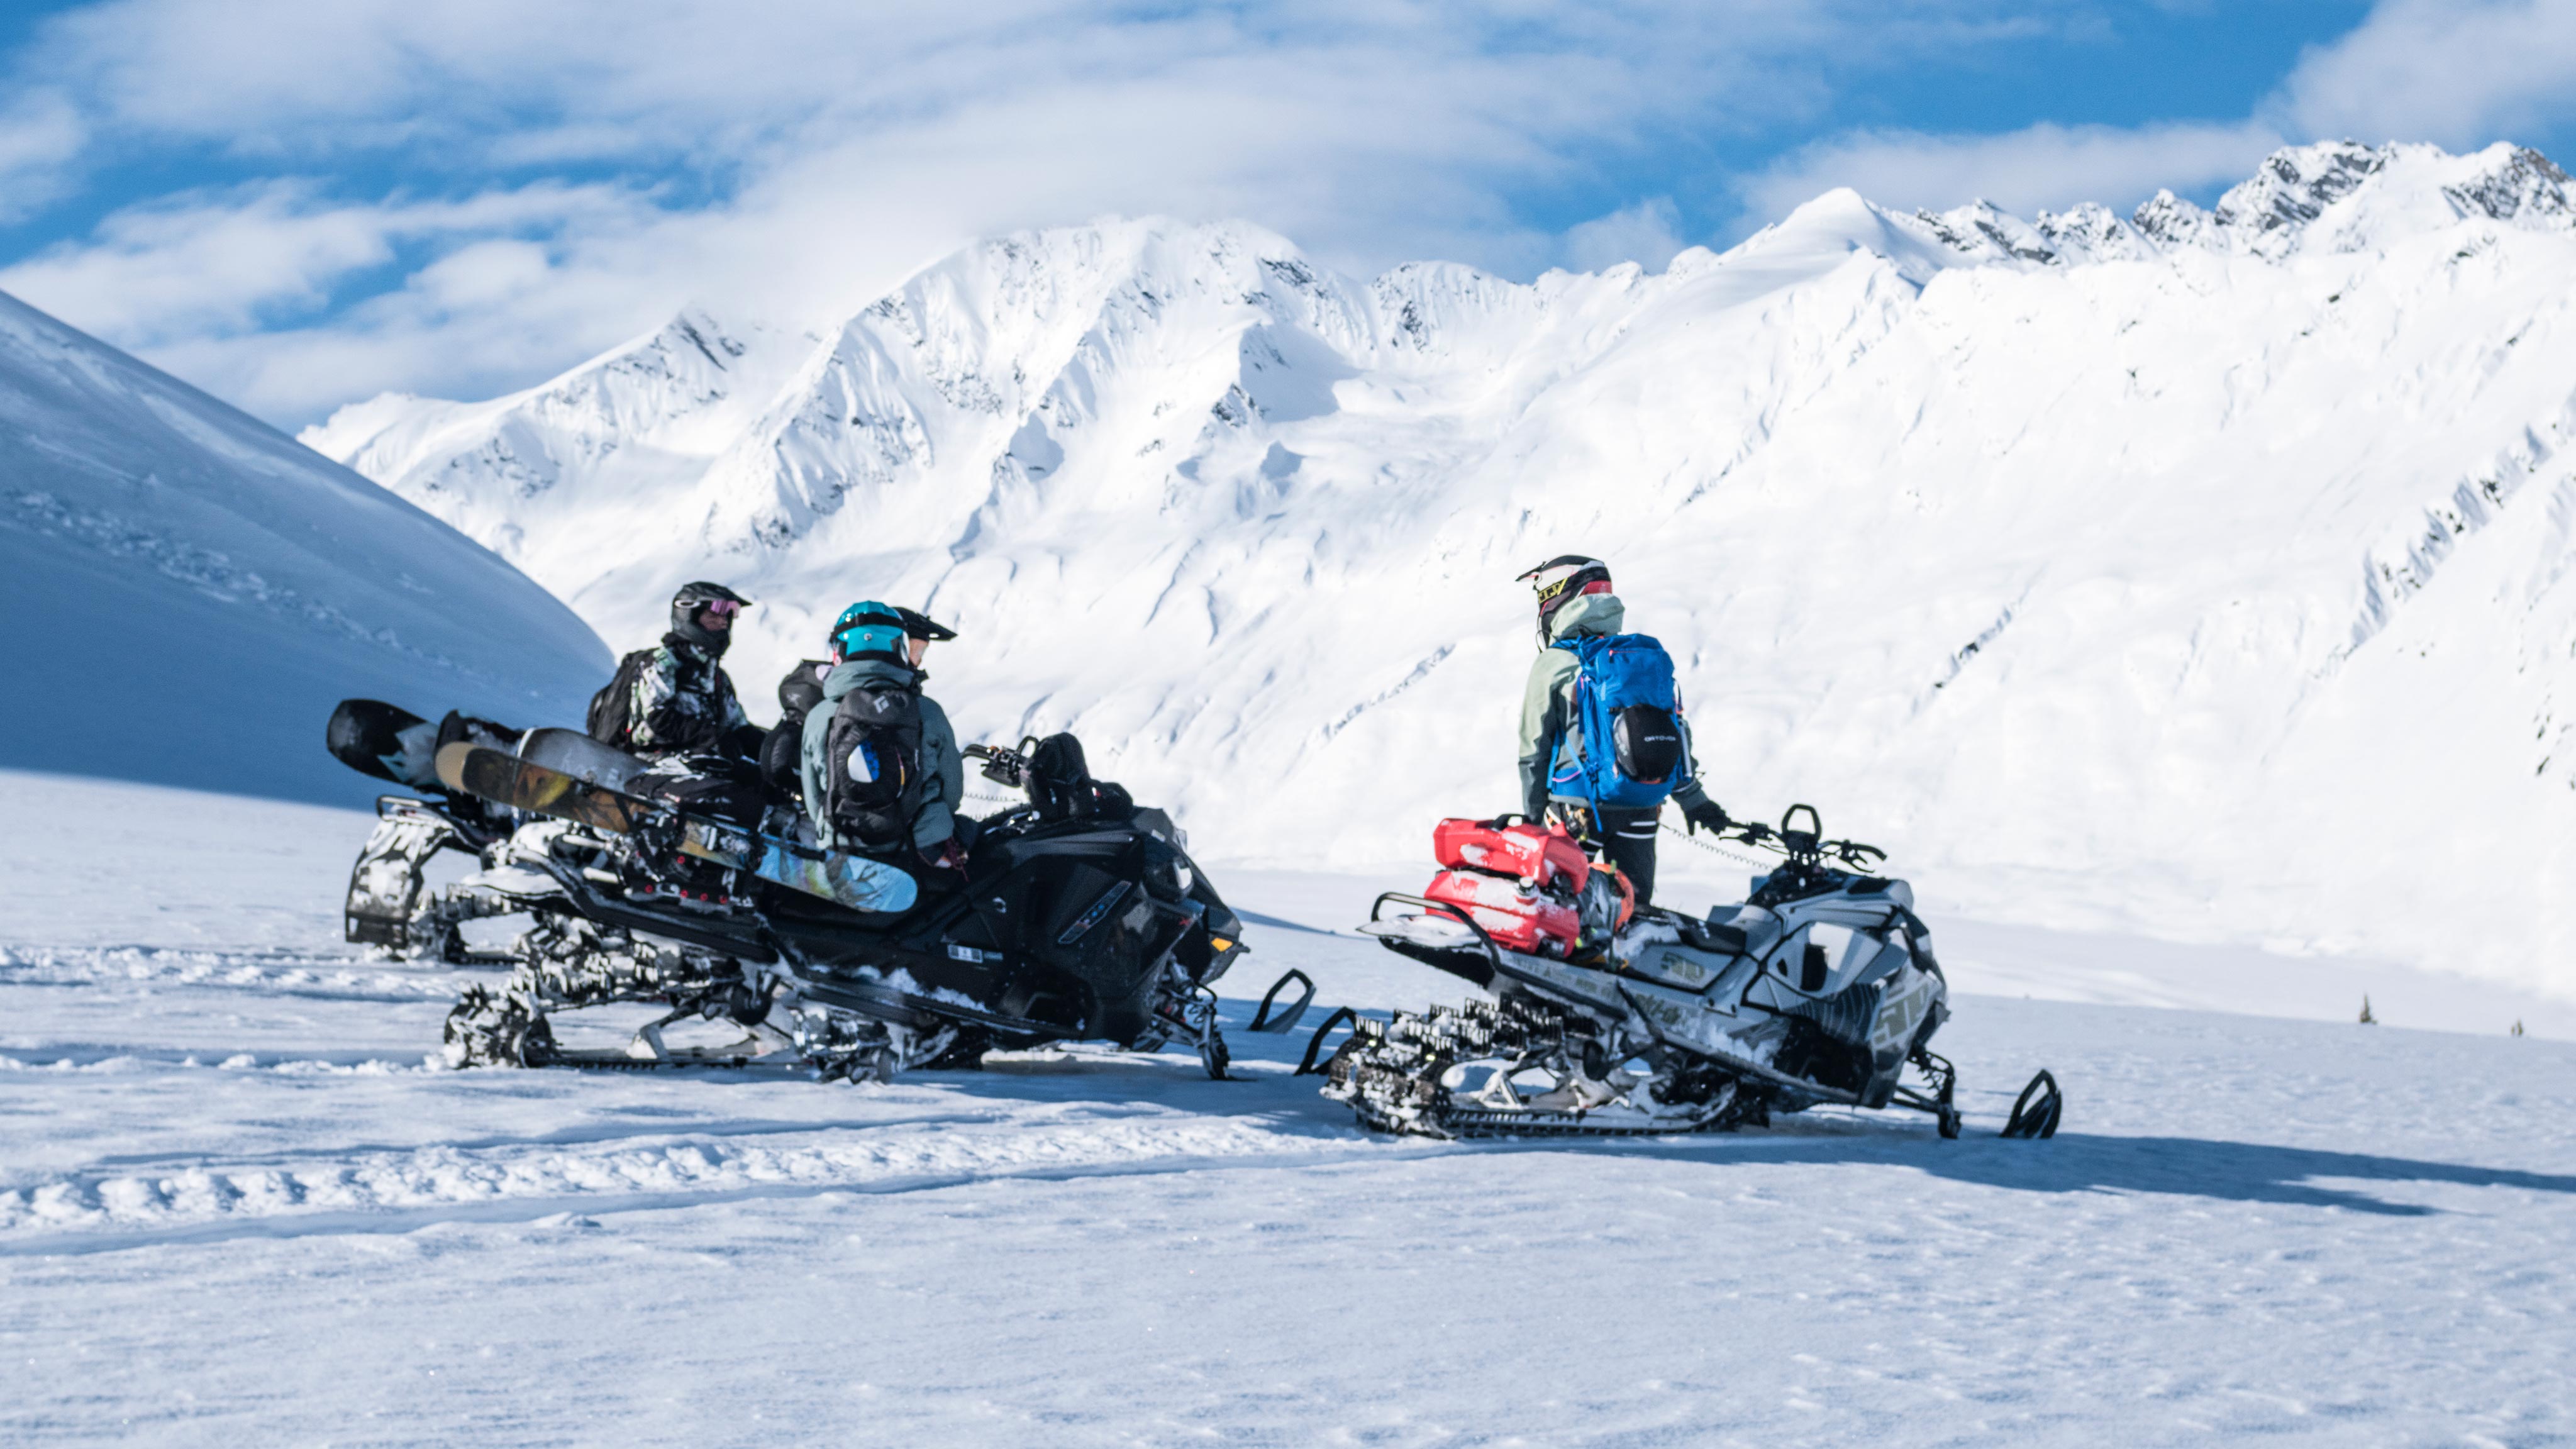 Three snowmobilers take a break on a snowy mountain